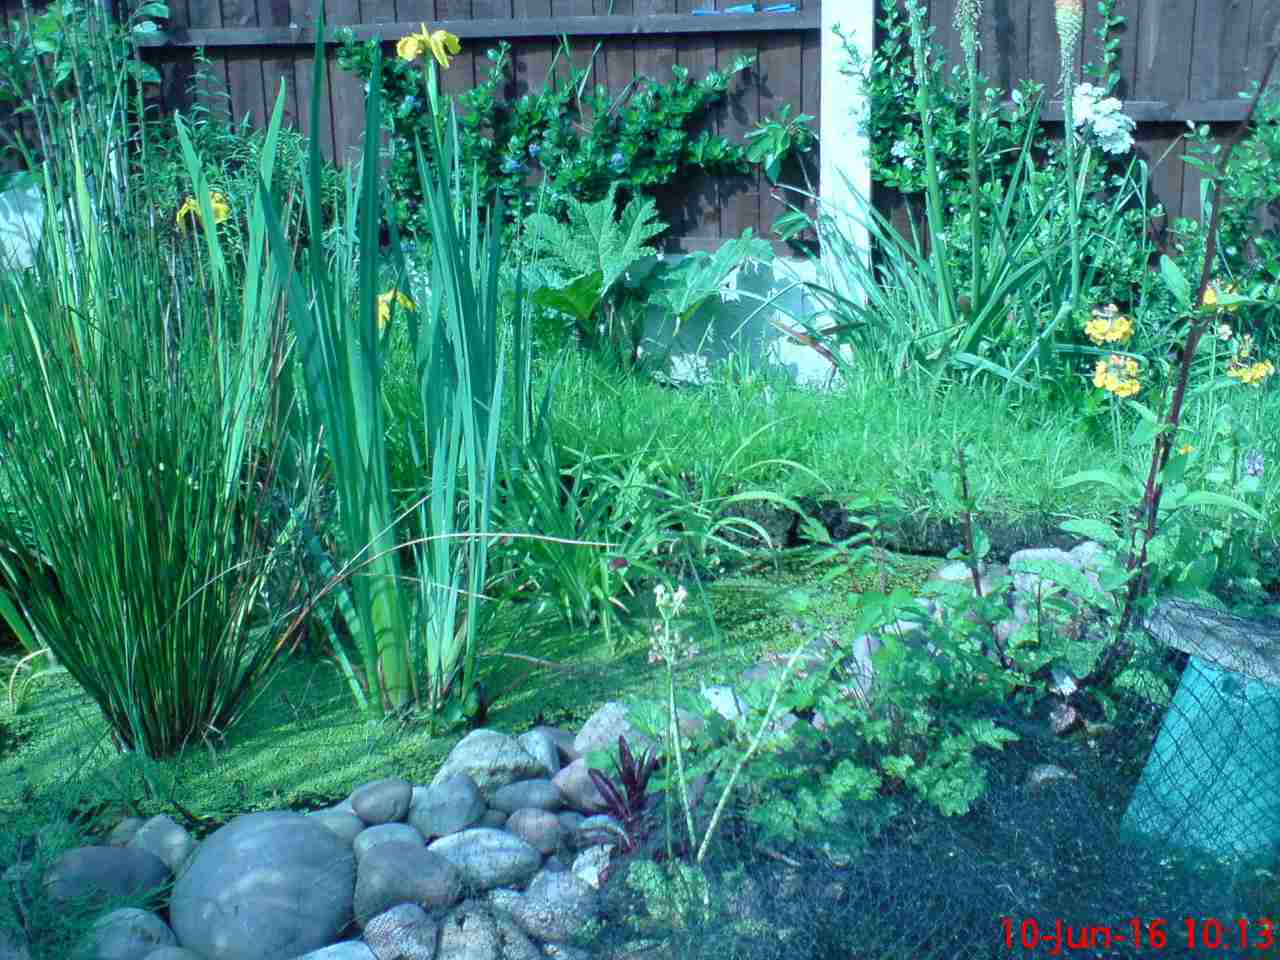 ImagesGarden/2016-06 Irises, Cotton & Zebra Grass In Marsh.jpg